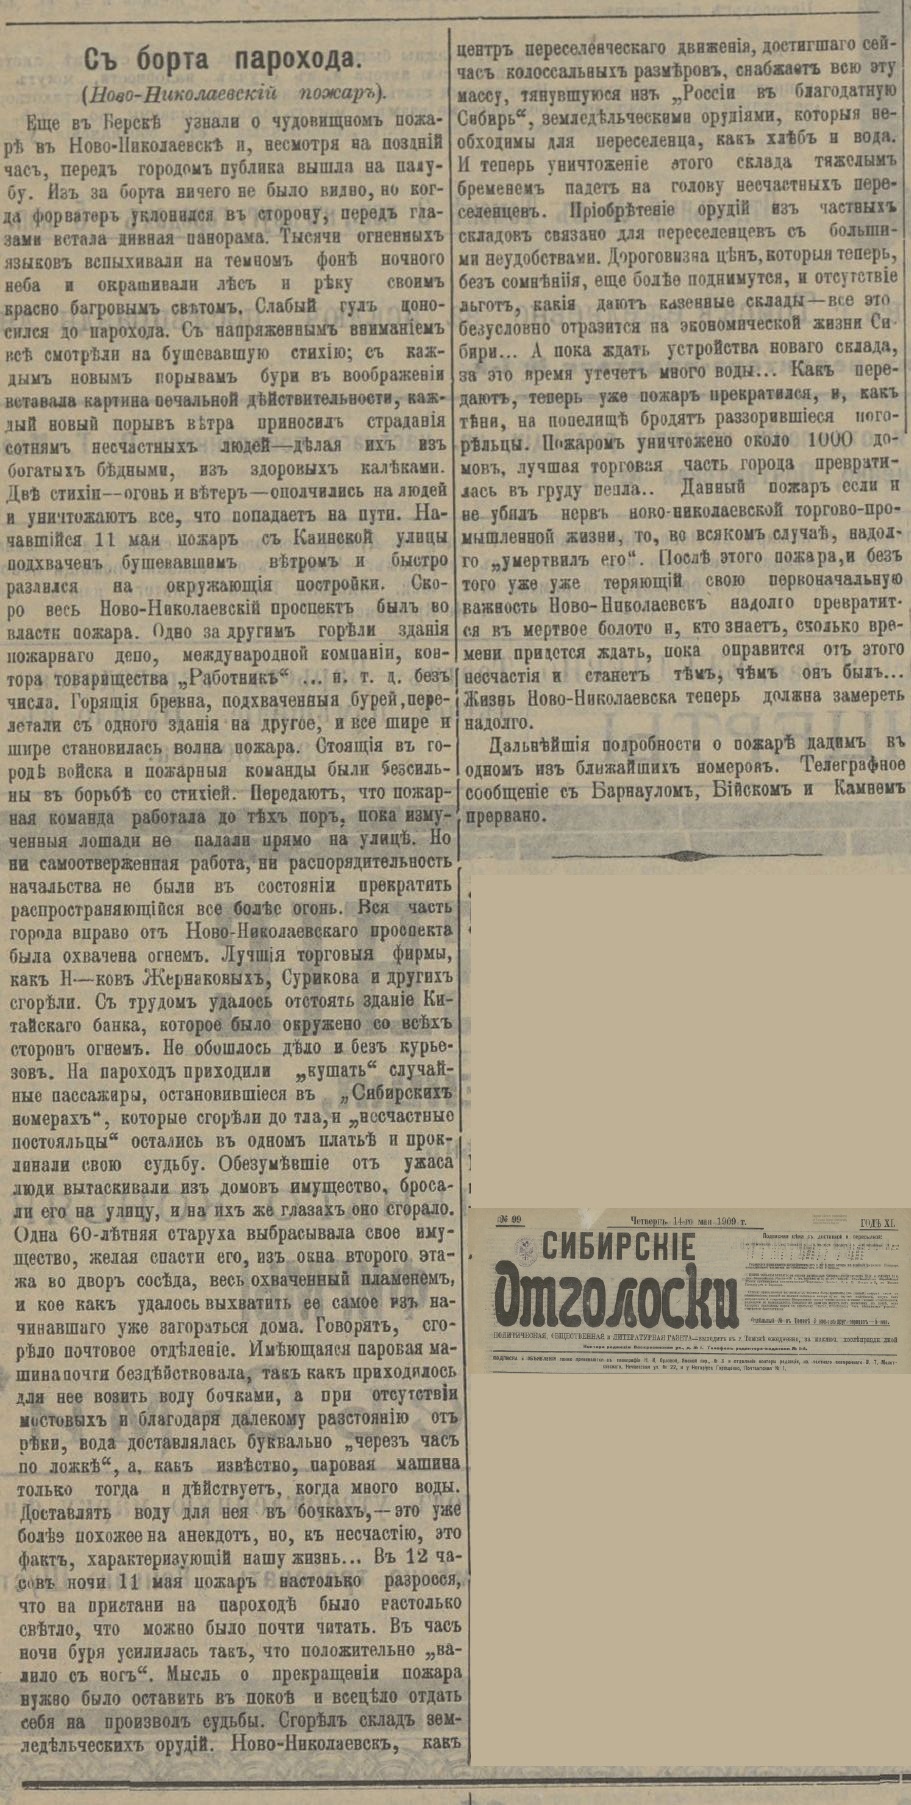 Сибирские отголоски 14 мая 1909